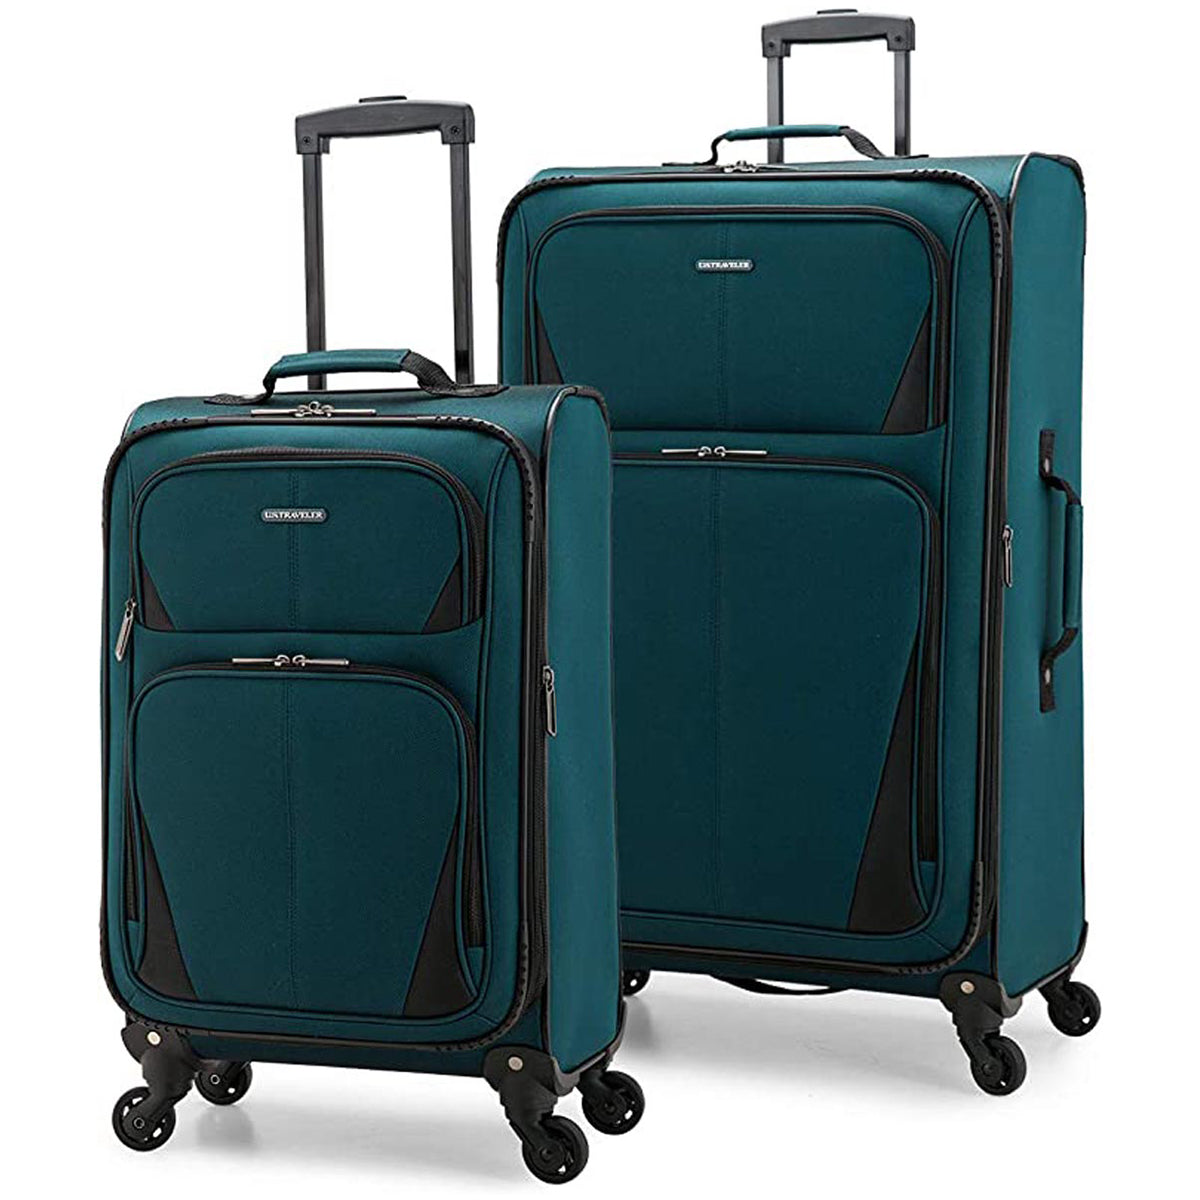 U.S. Traveler Aviron Bay Expandable Softside Luggage with Spinner Wheels, 2 Piece 